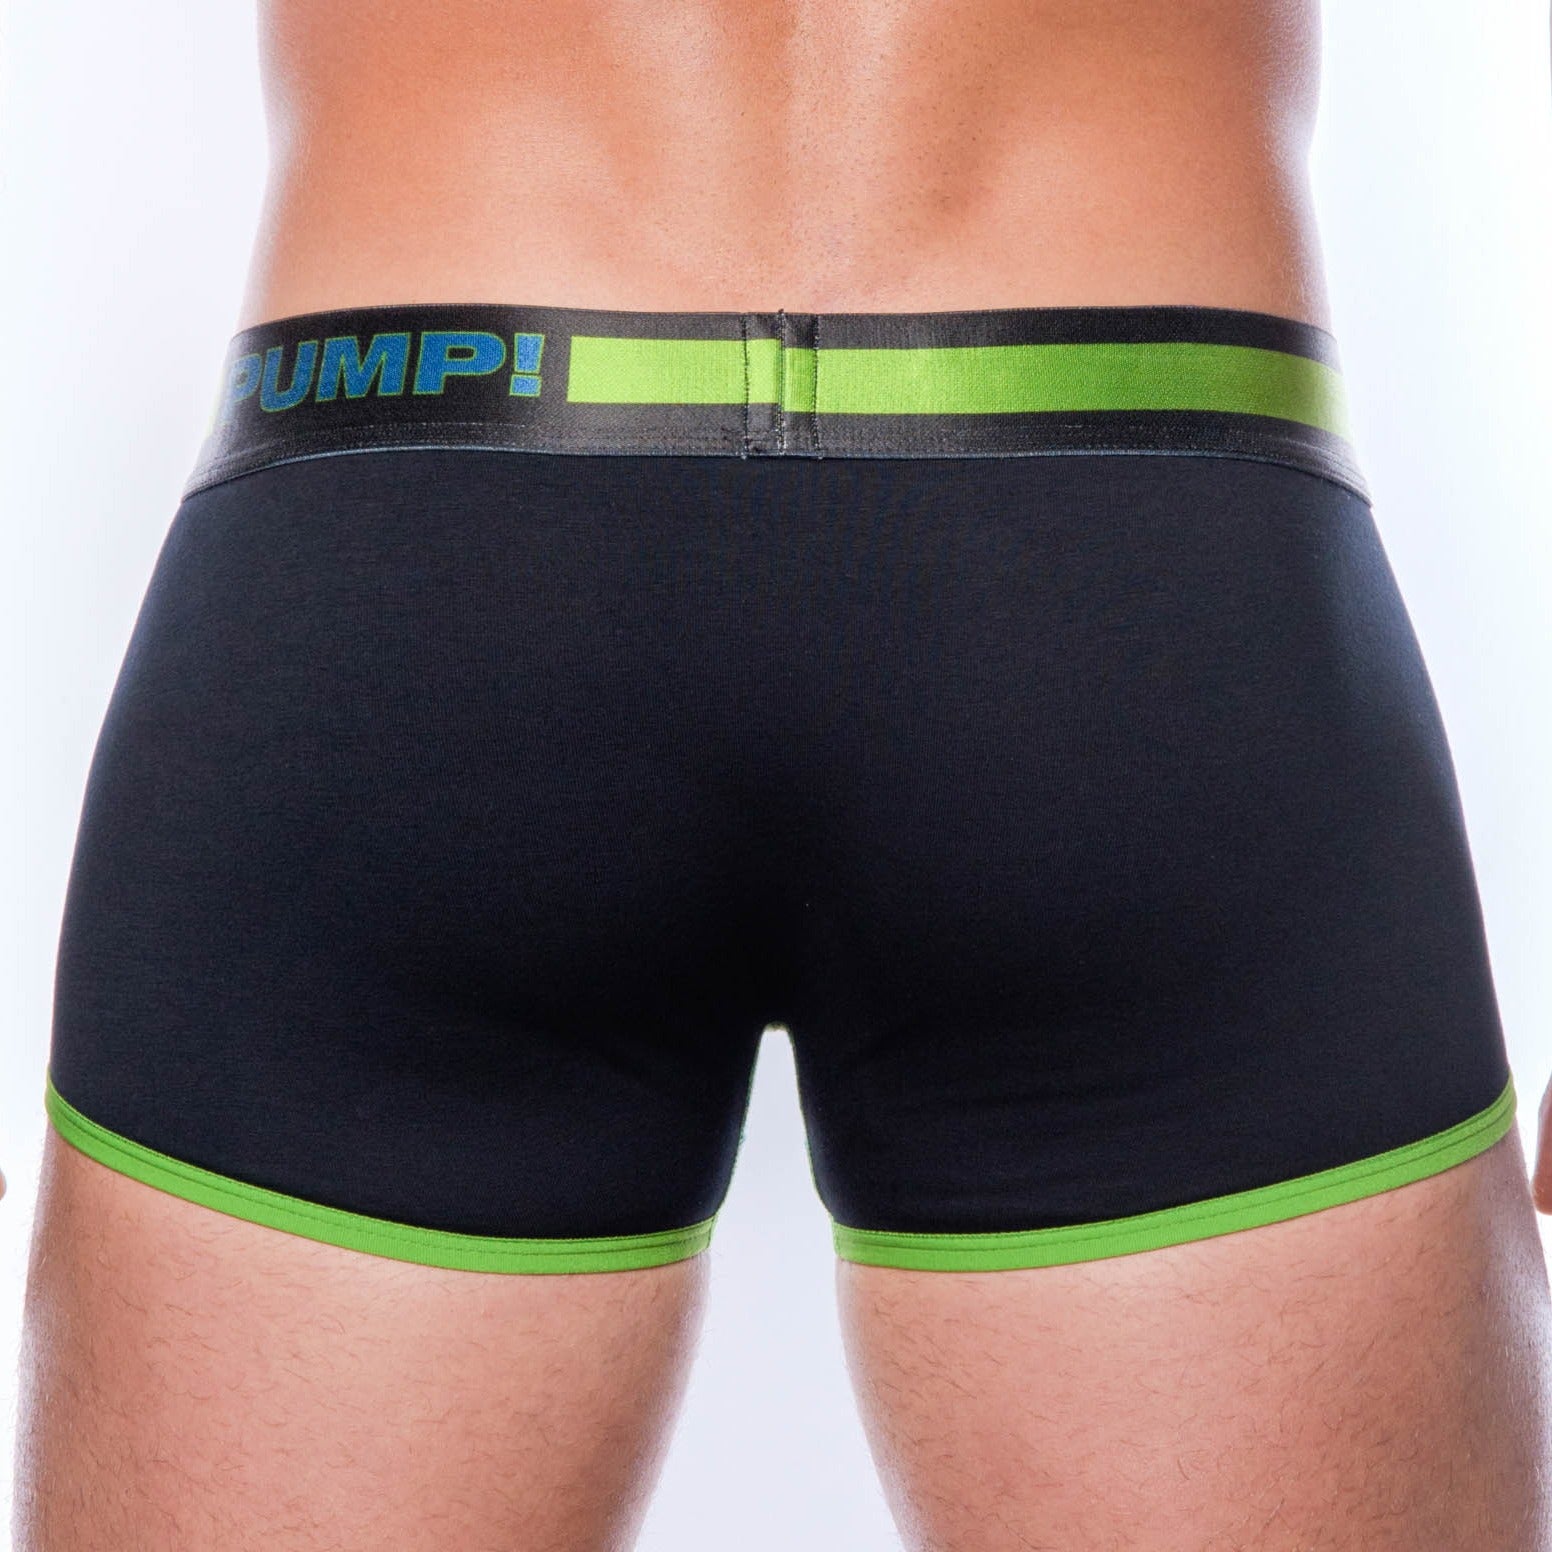 Play Boxer - Green Back by PUMP! Underwear at Trenderwear.com